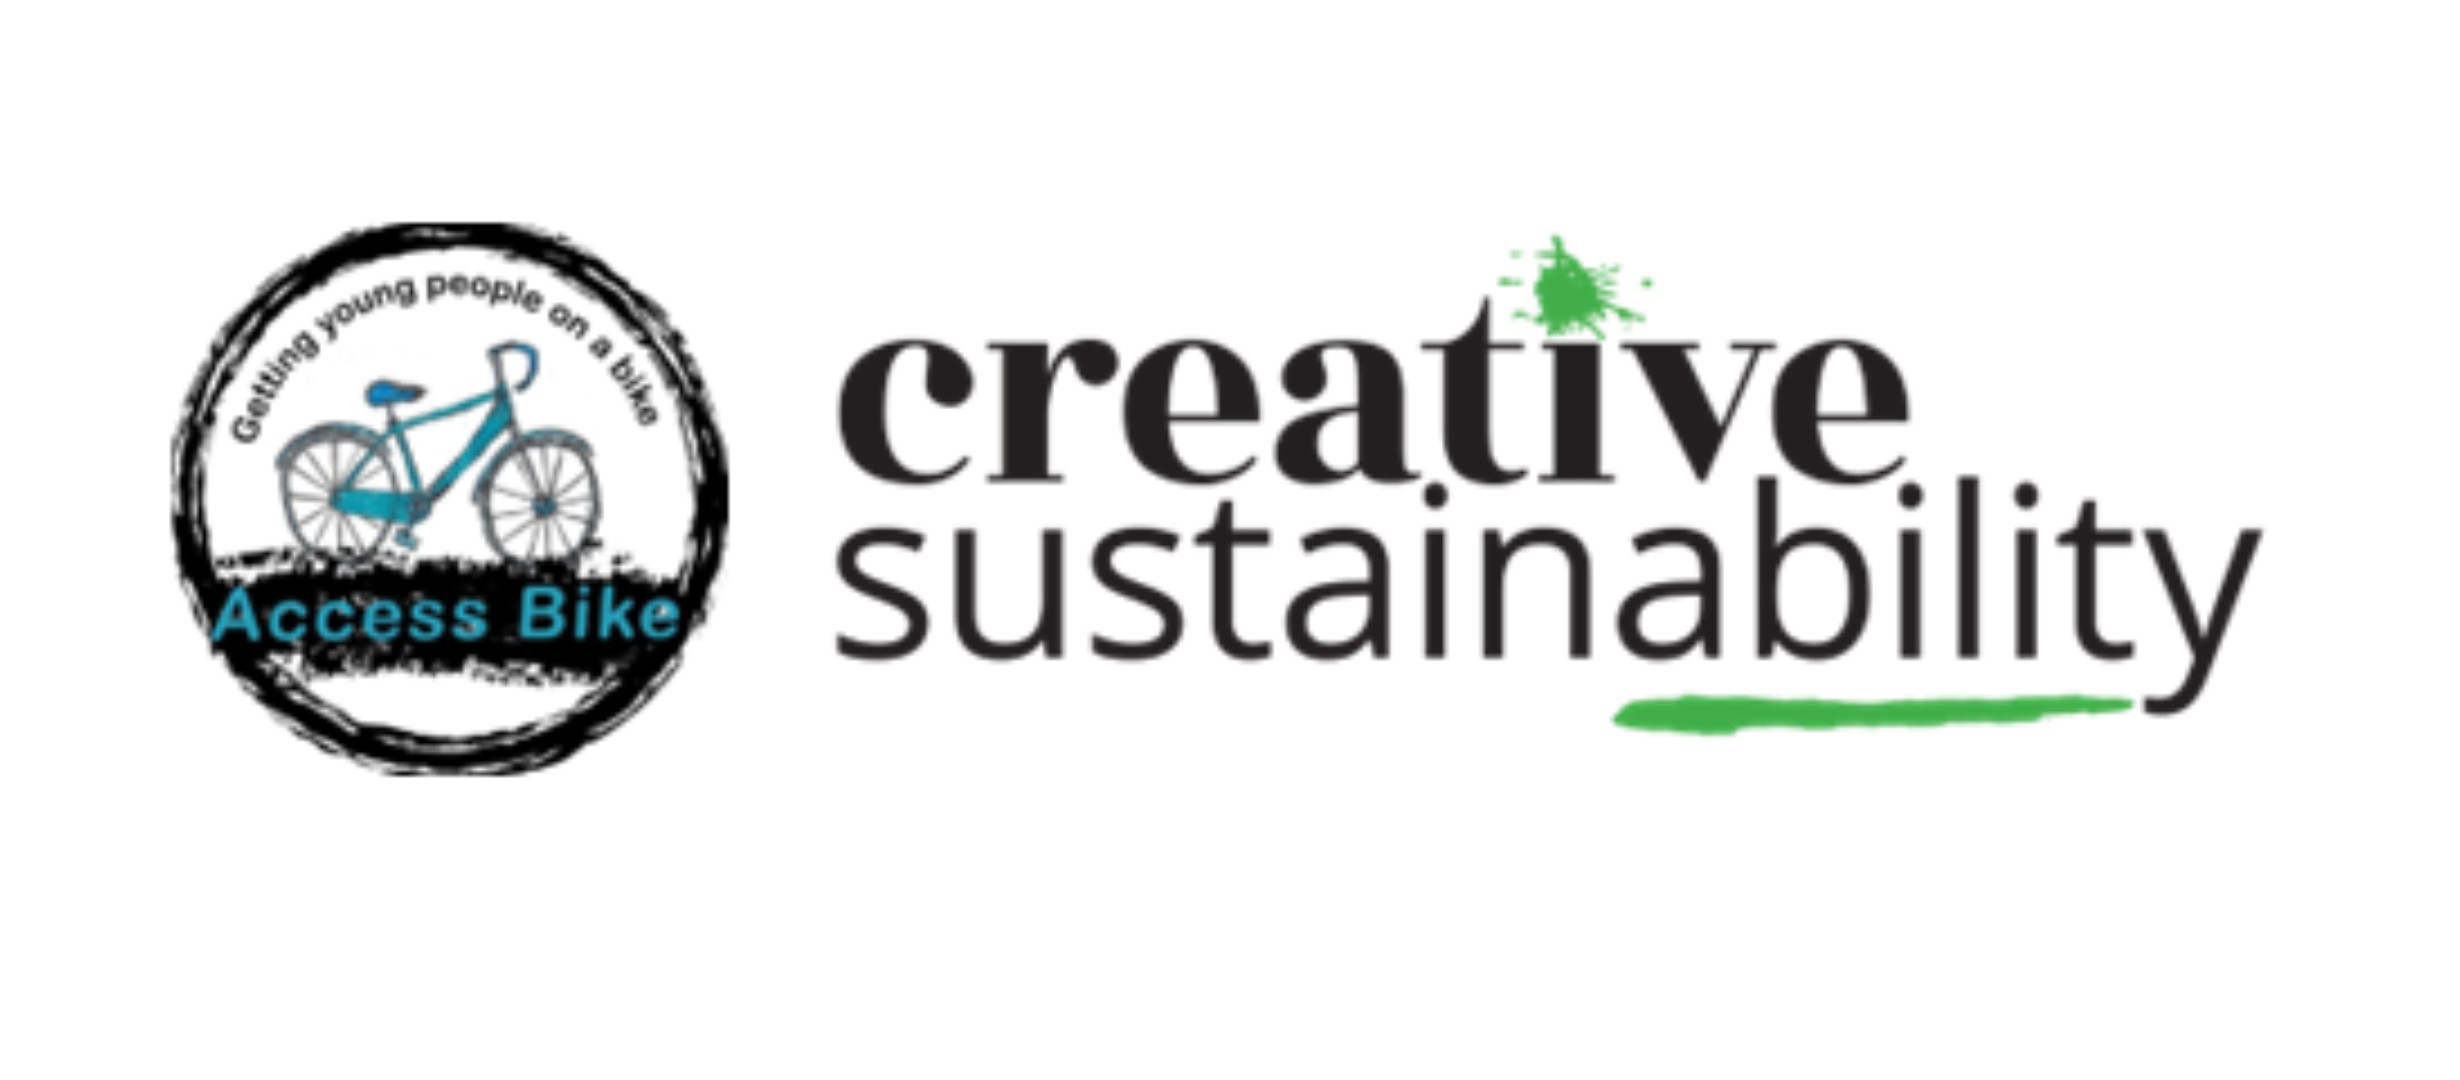 Access Bike at Creative Sustainability